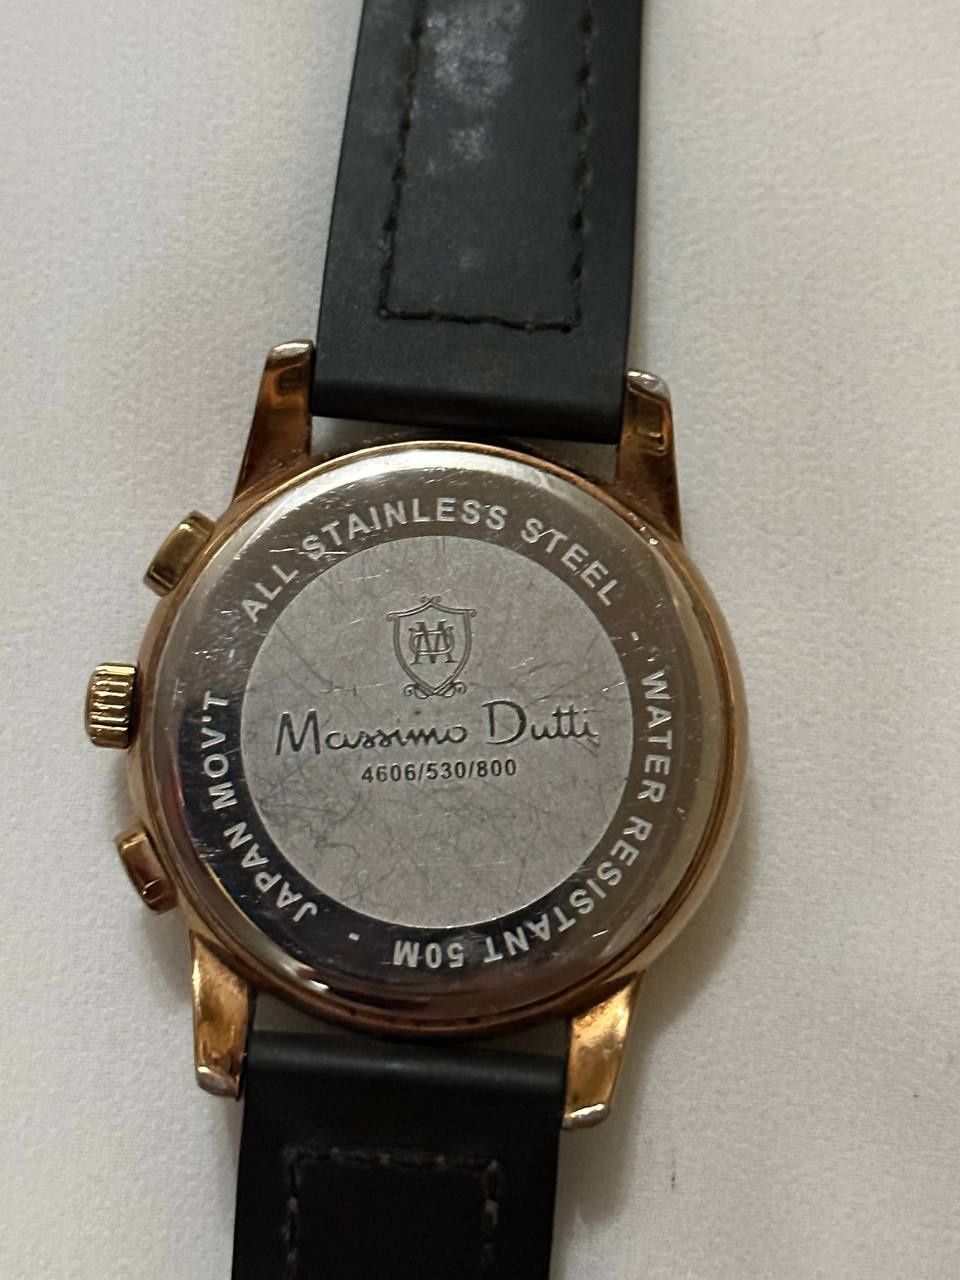 Итальянские часы от бренда "Massimo Dutti"